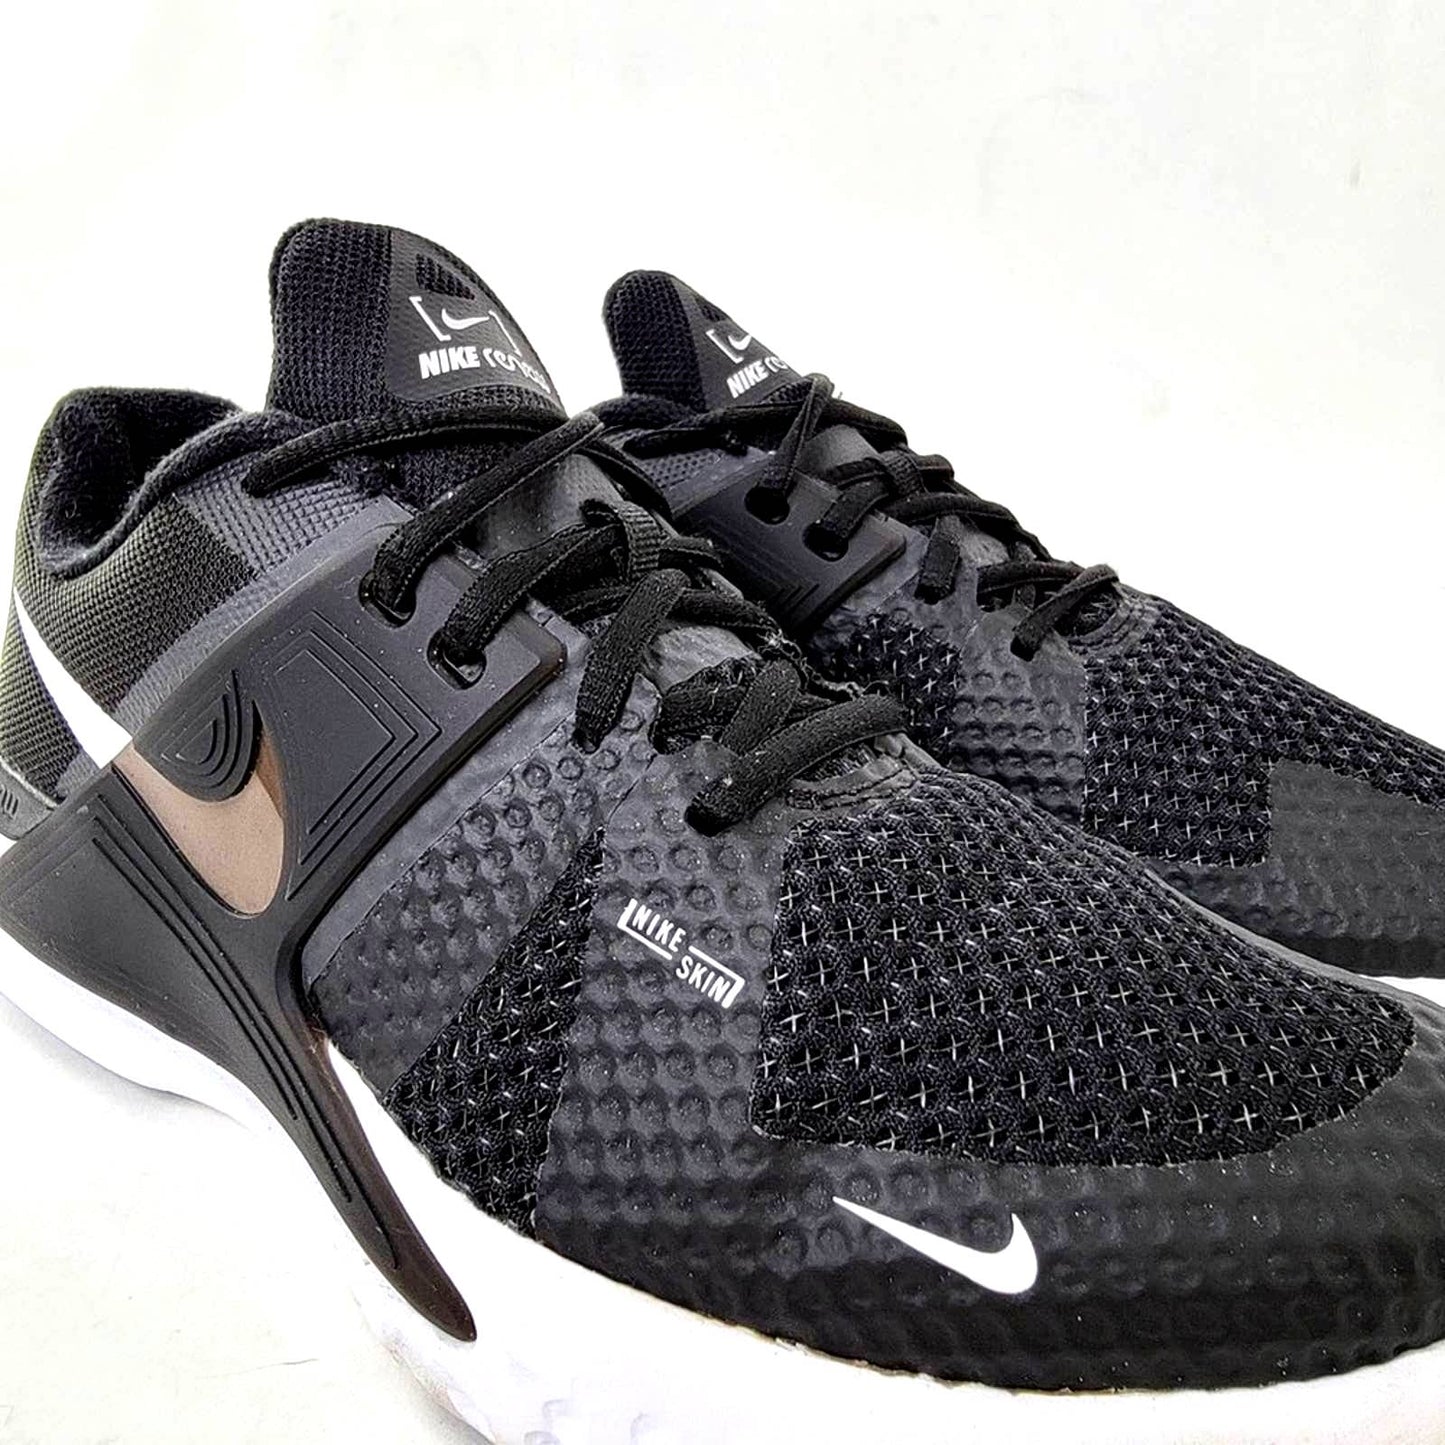 Nike Renew Fusion - Smoke Grey Shoes - 8/9.5